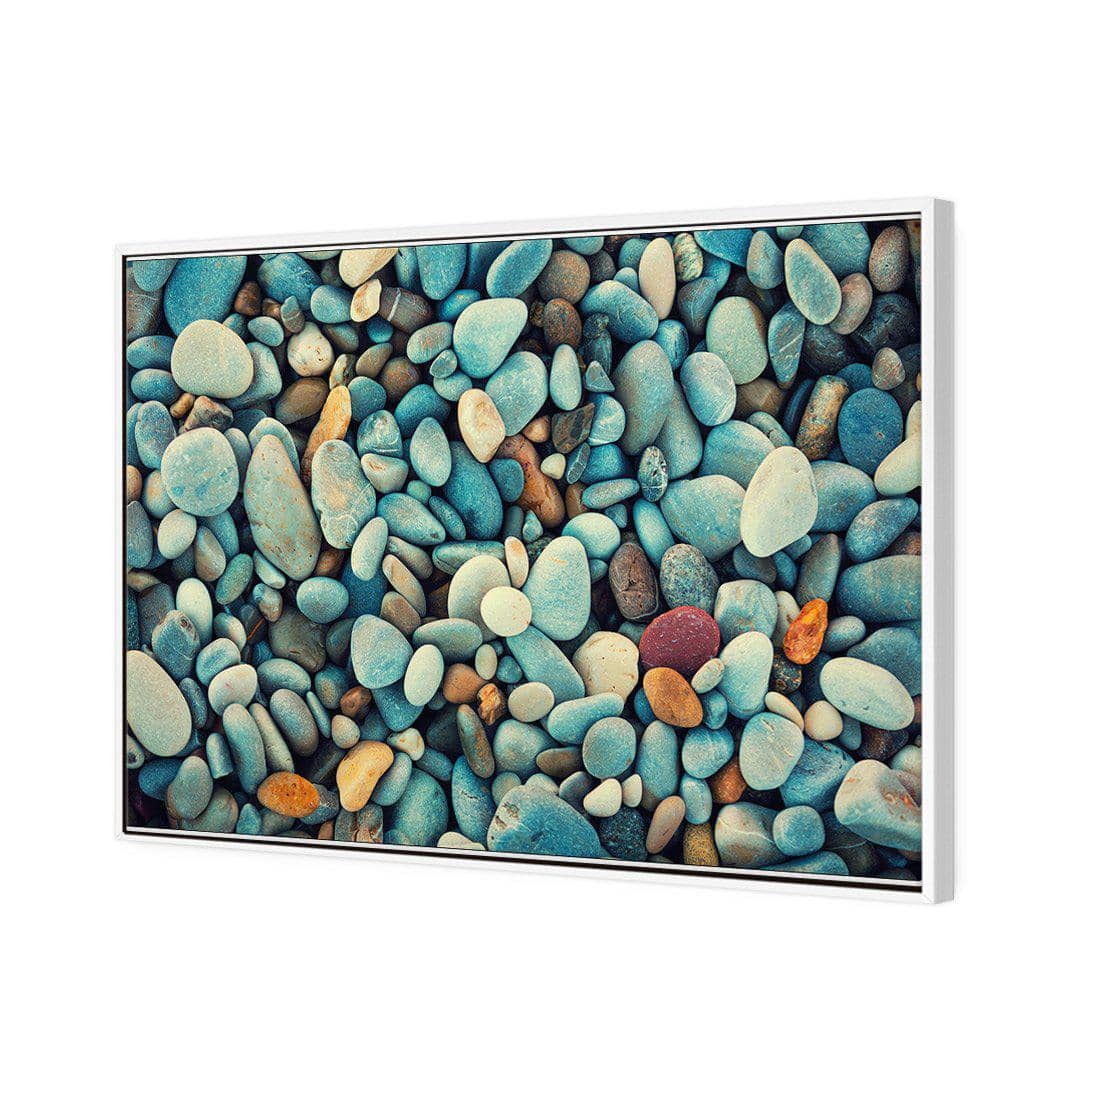 Peddling Pebbles Canvas Art-Canvas-Wall Art Designs-45x30cm-Canvas - White Frame-Wall Art Designs